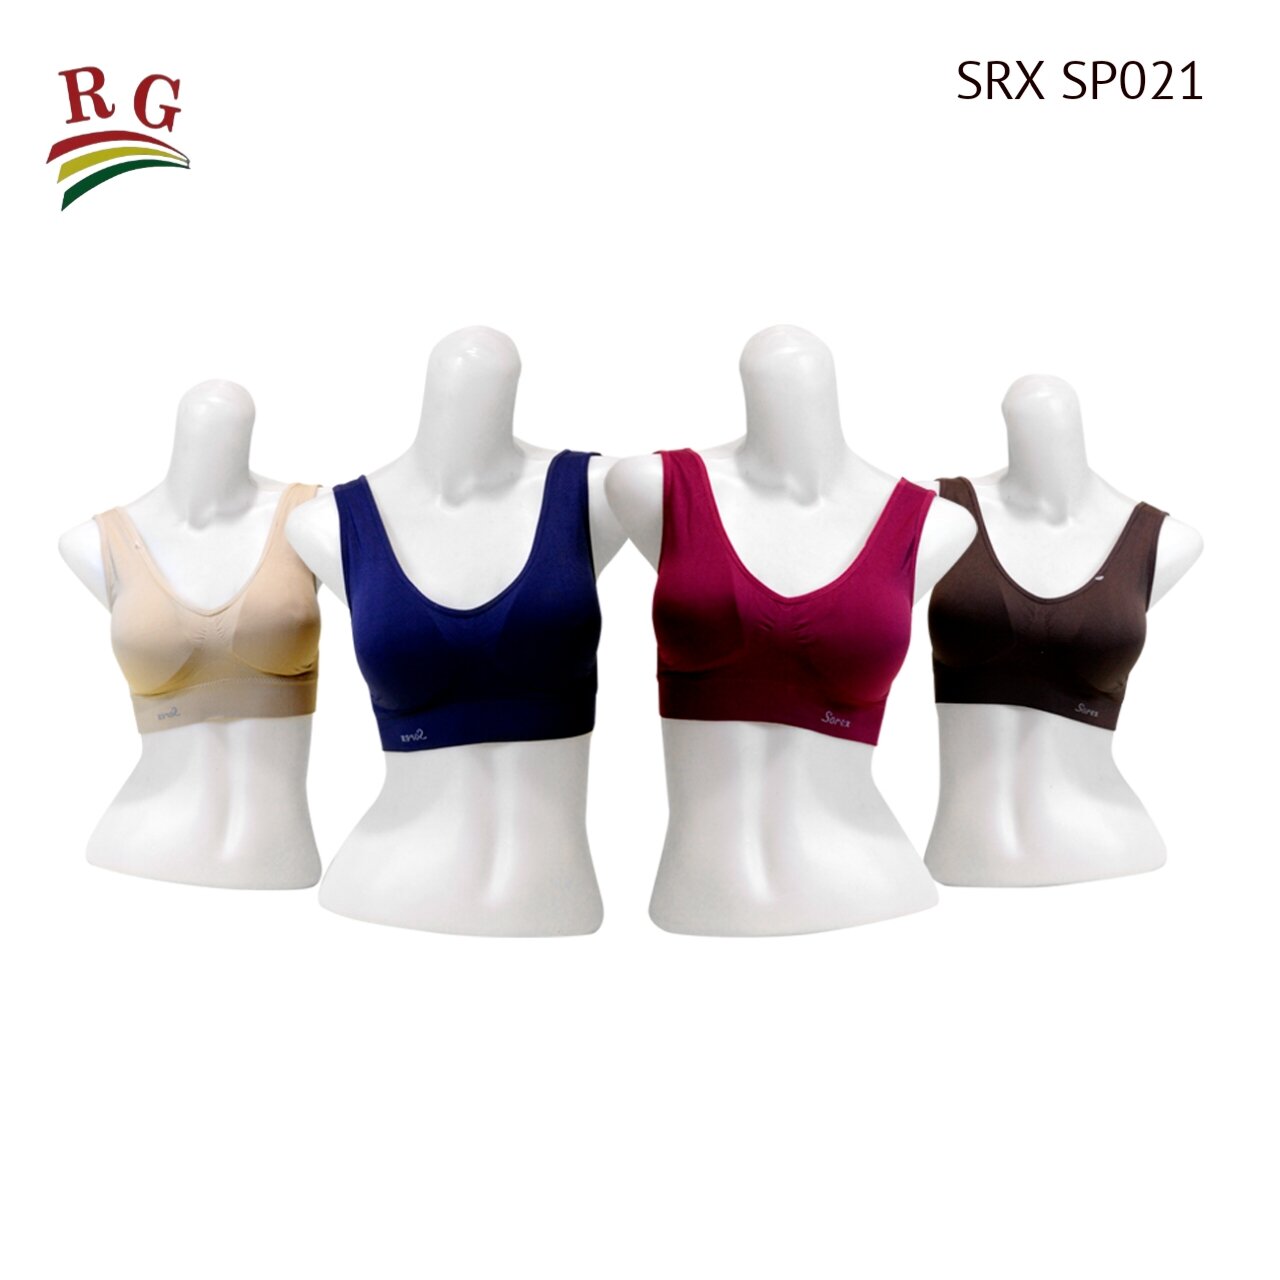 Sport Bra Wanita Original Sorex Size 32-36 & 38-42 Sp21 Sp20 Bh Wanita